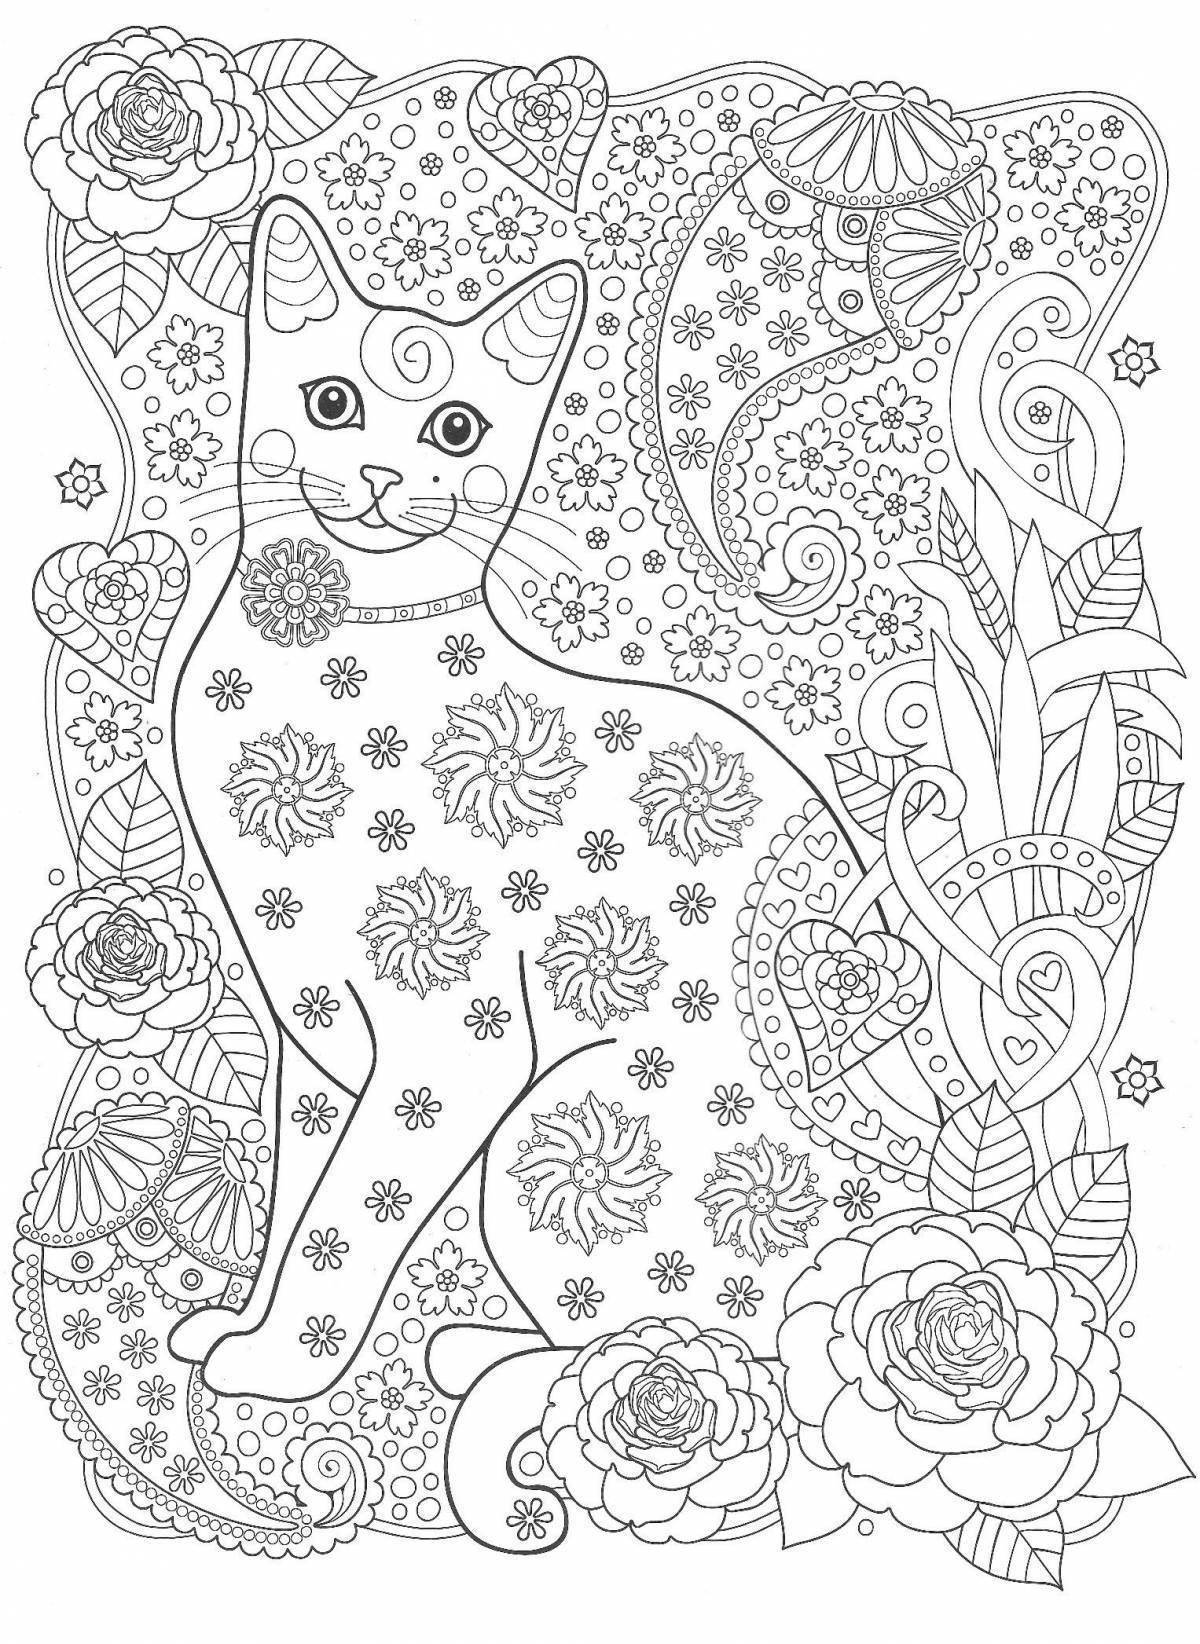 Radiant cat antistress coloring book